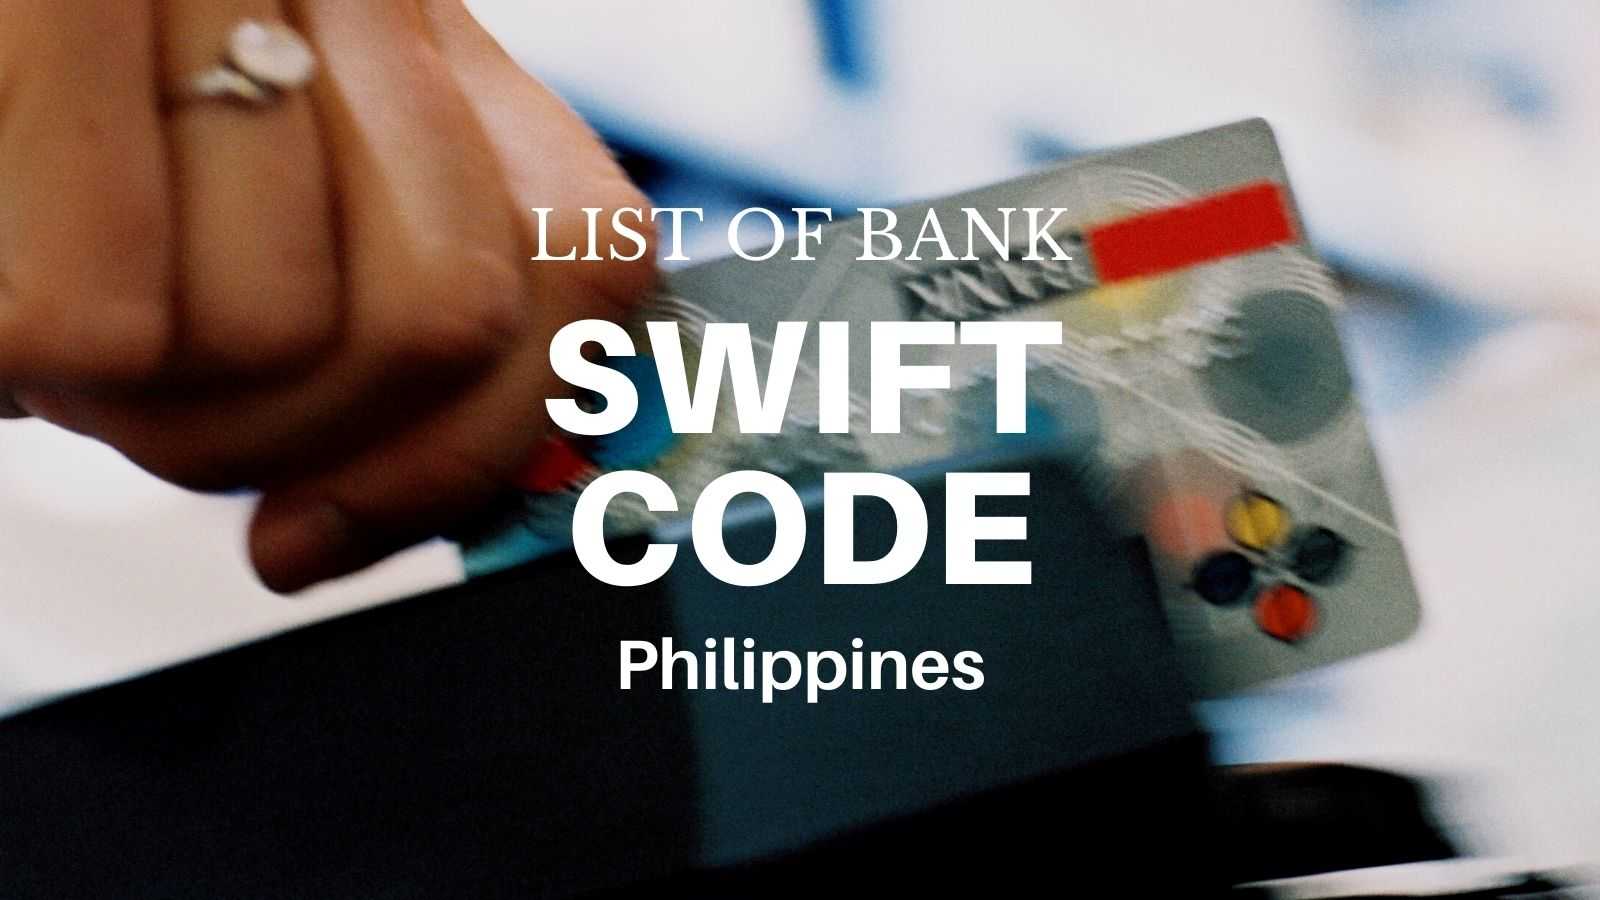 swift code bdo bpi metrobank pnb landbank